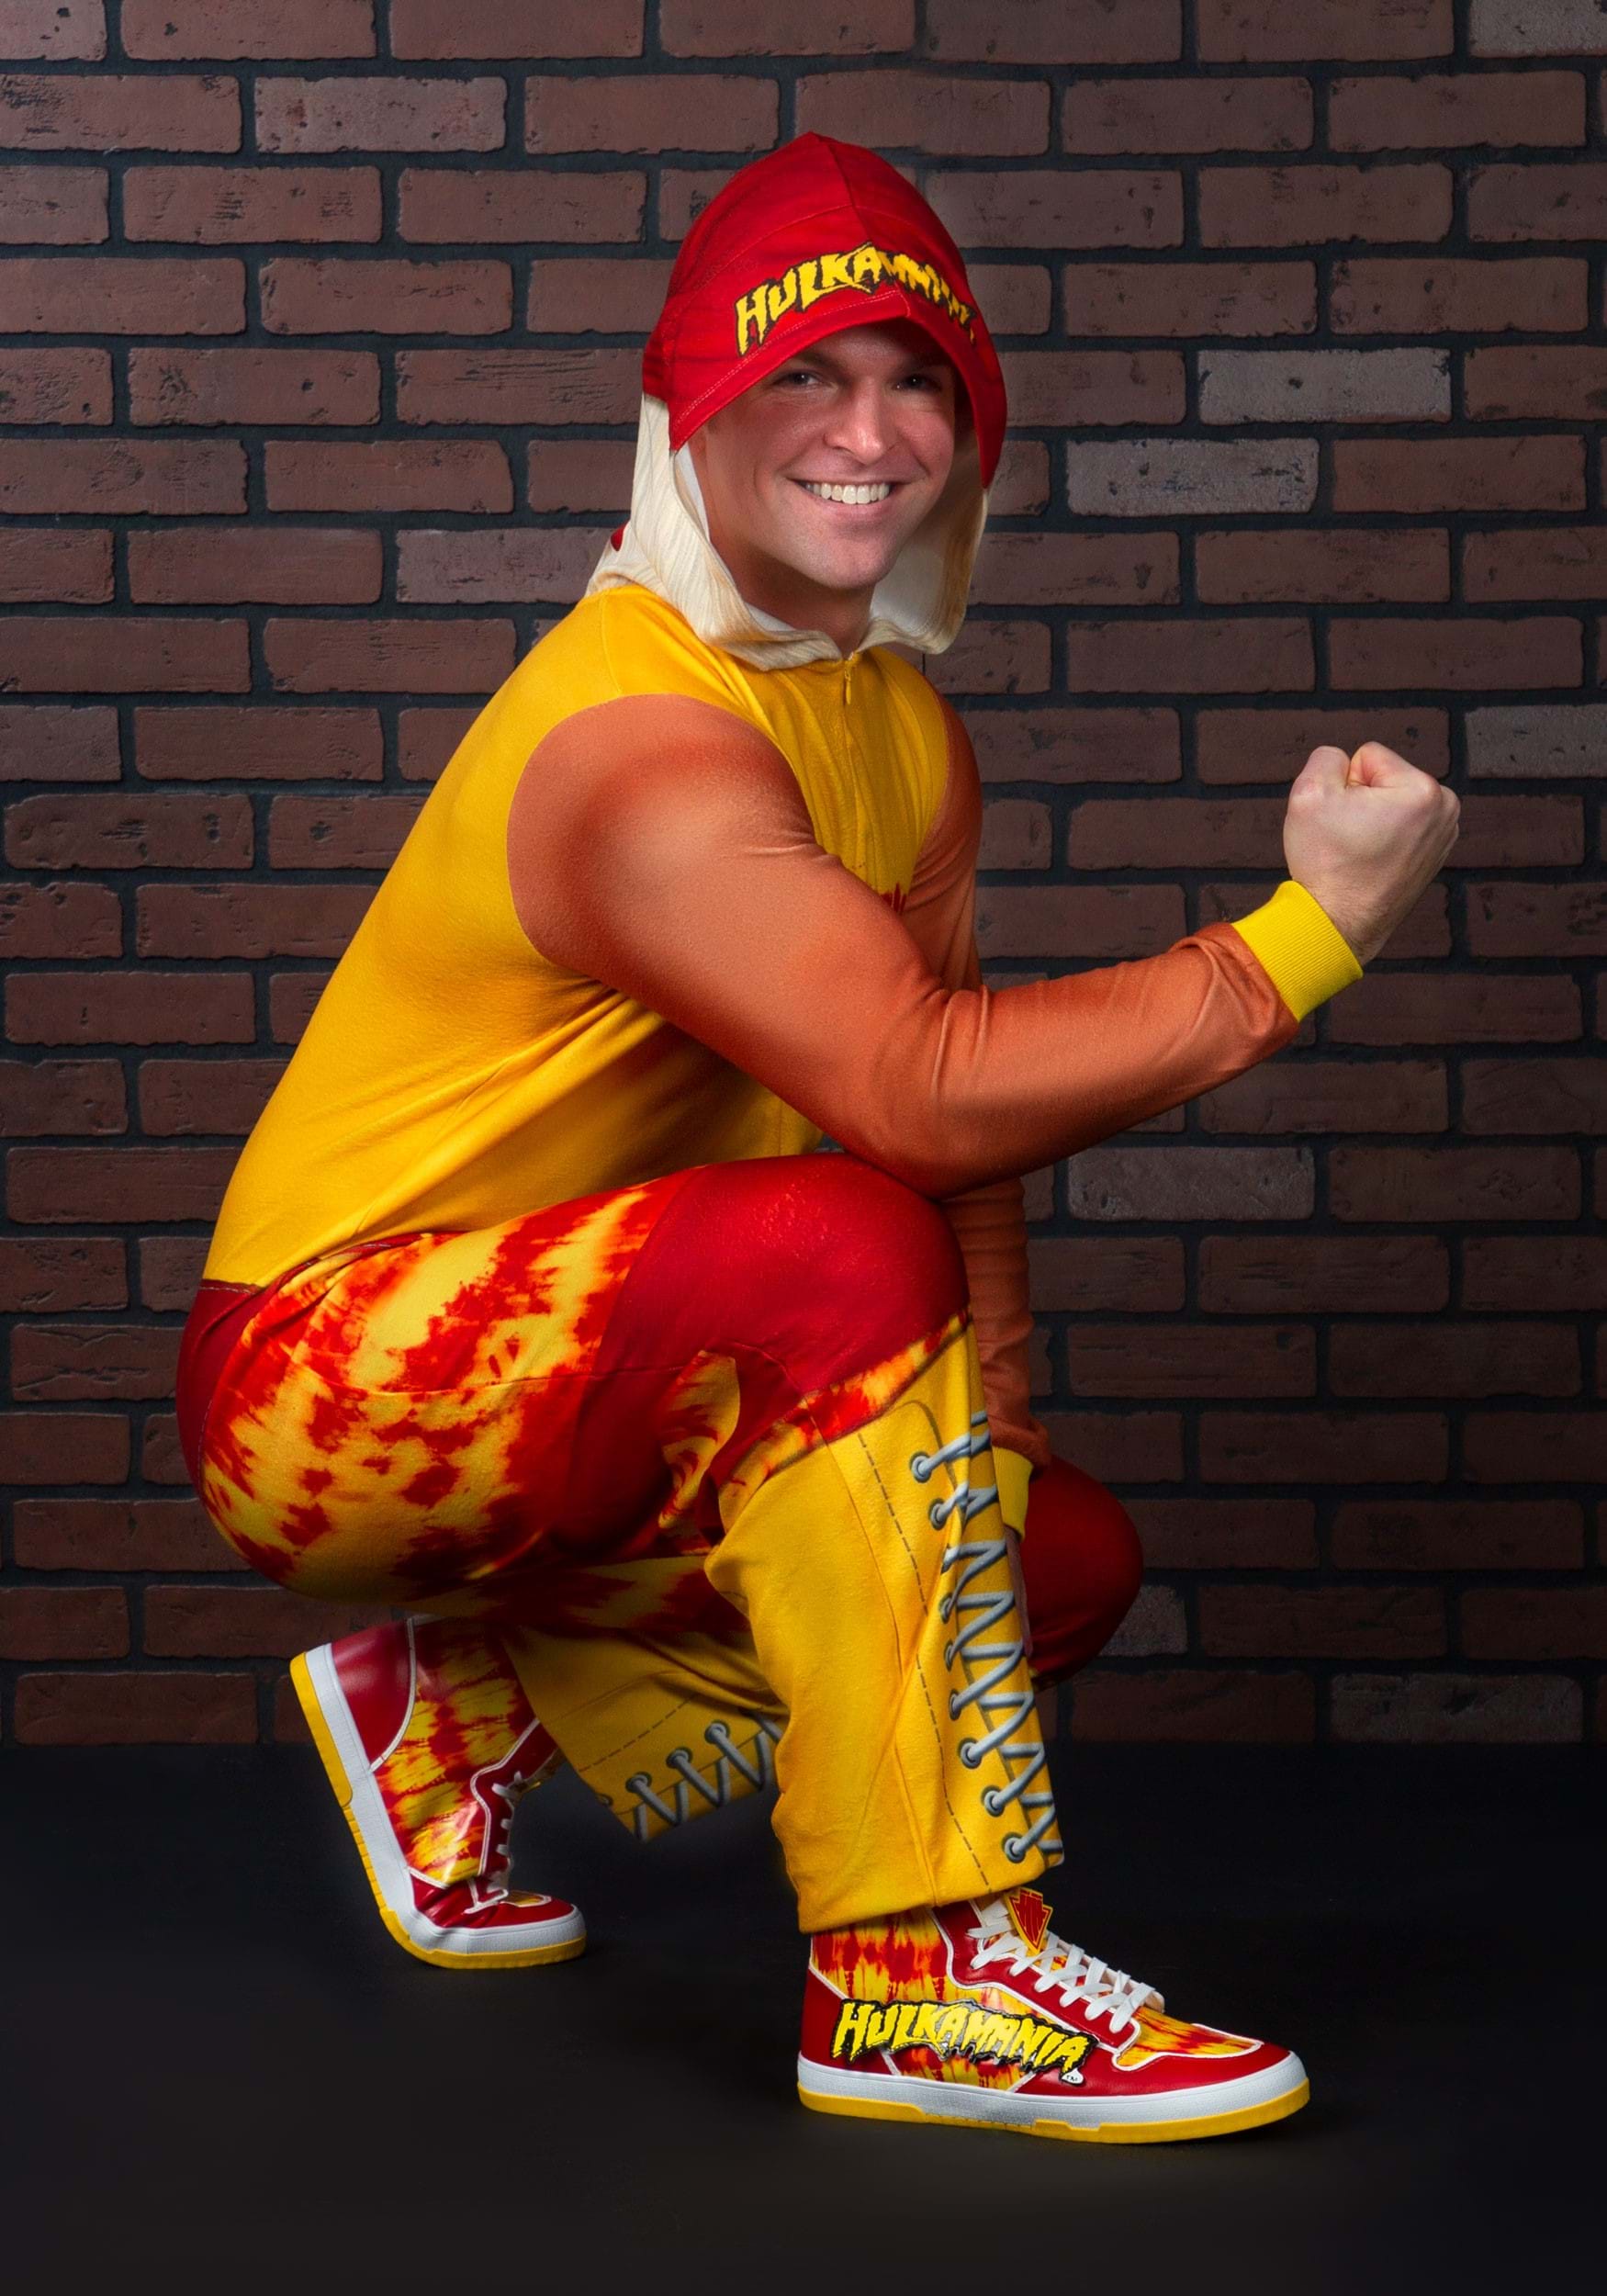 Hulk Hogan Adult Union Suit photo